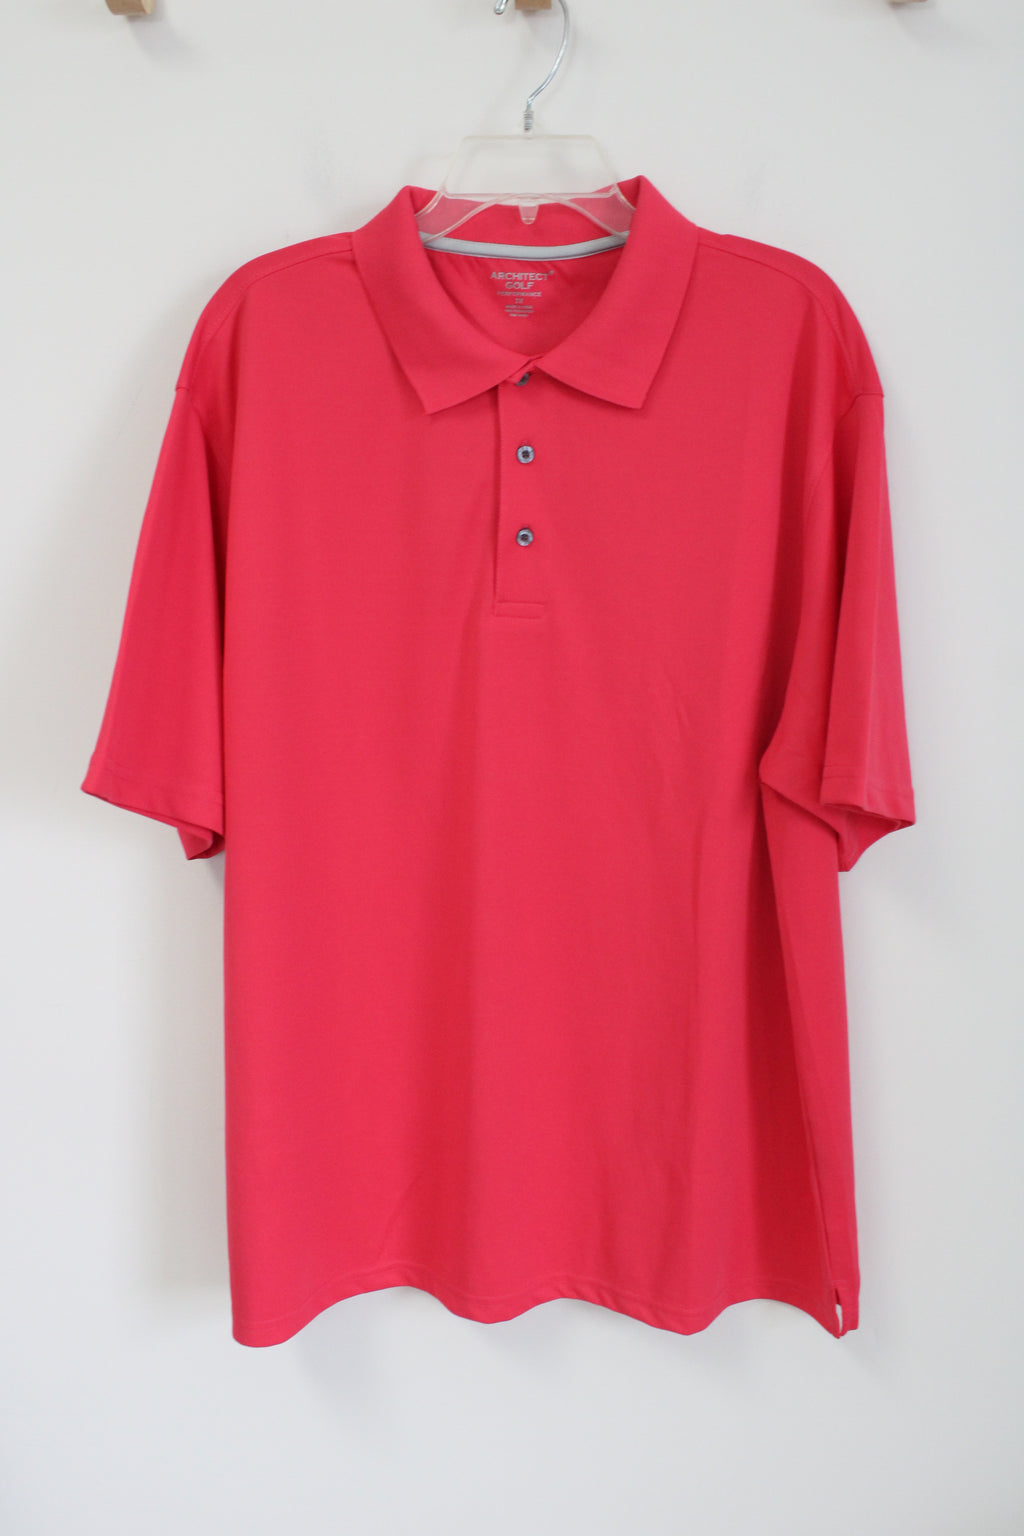 Architect Golf Performance Pink Polo Shirt | 2X